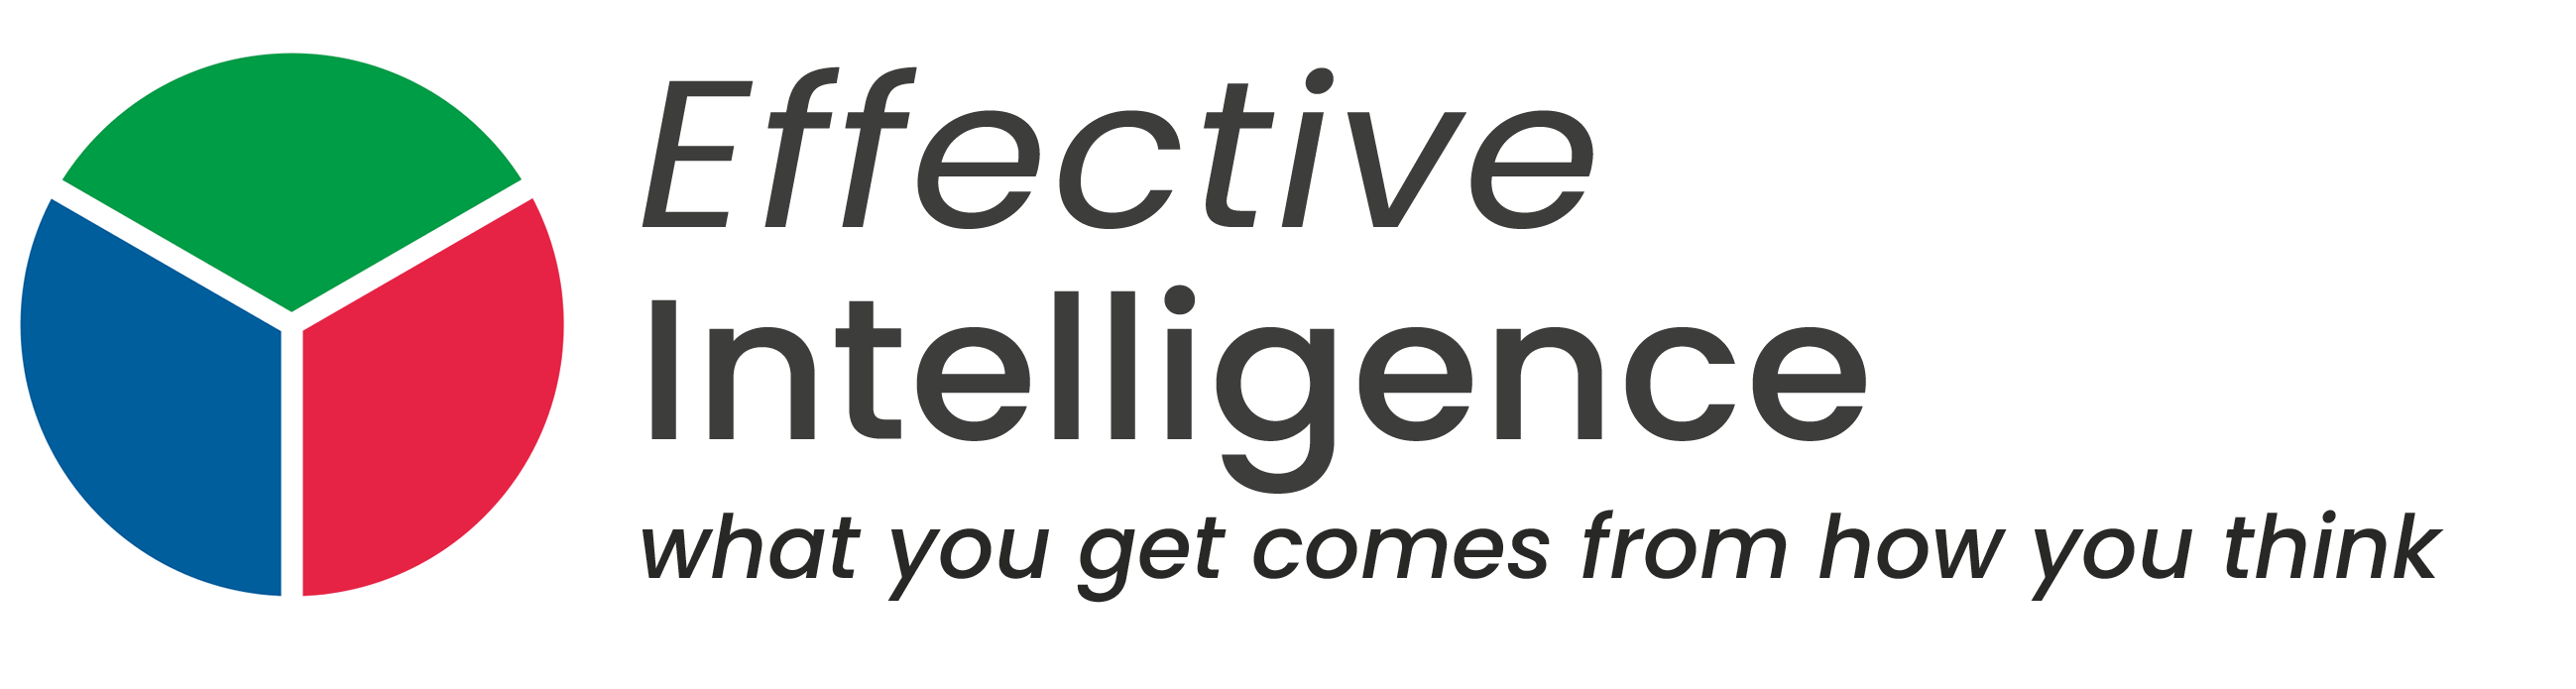 Effective Intelligence